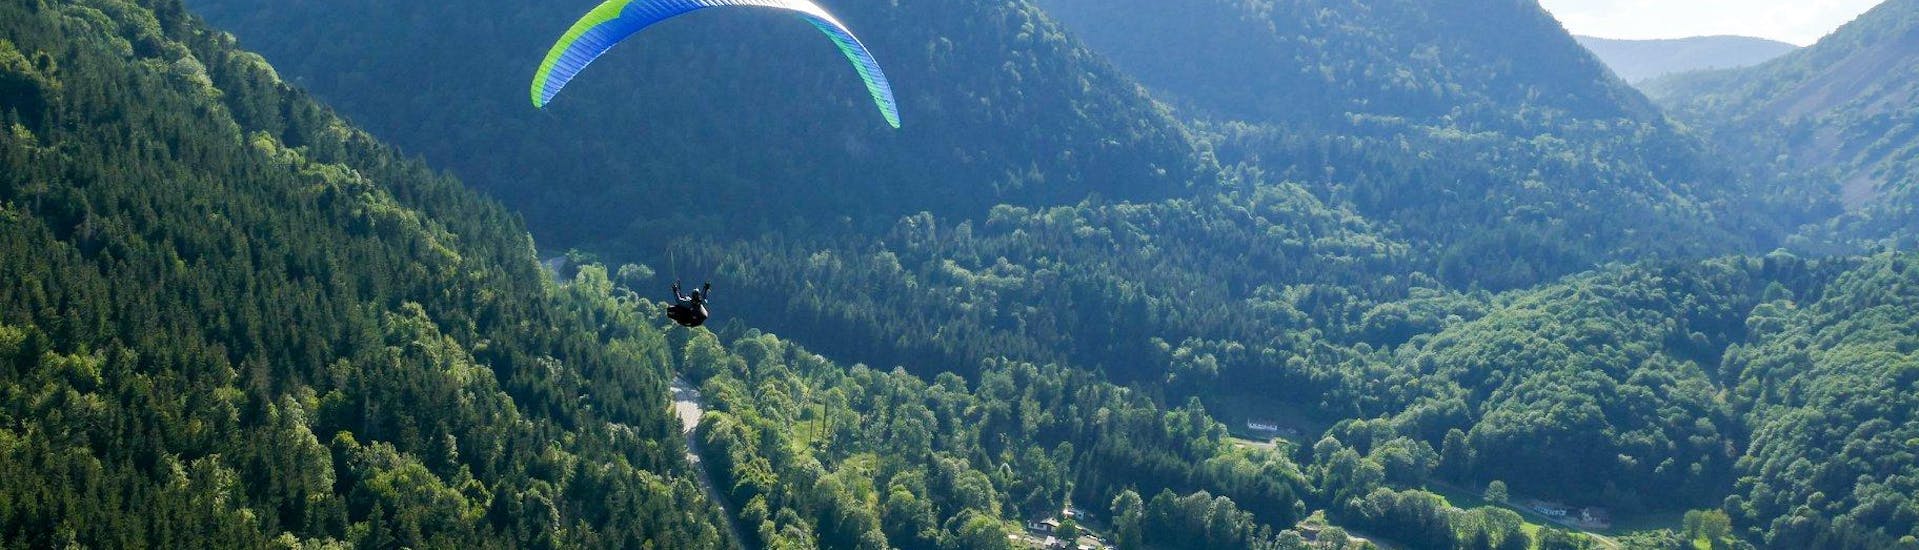 Thermisch tandem paragliding in Bach - Tiroler Lech Nature Park.